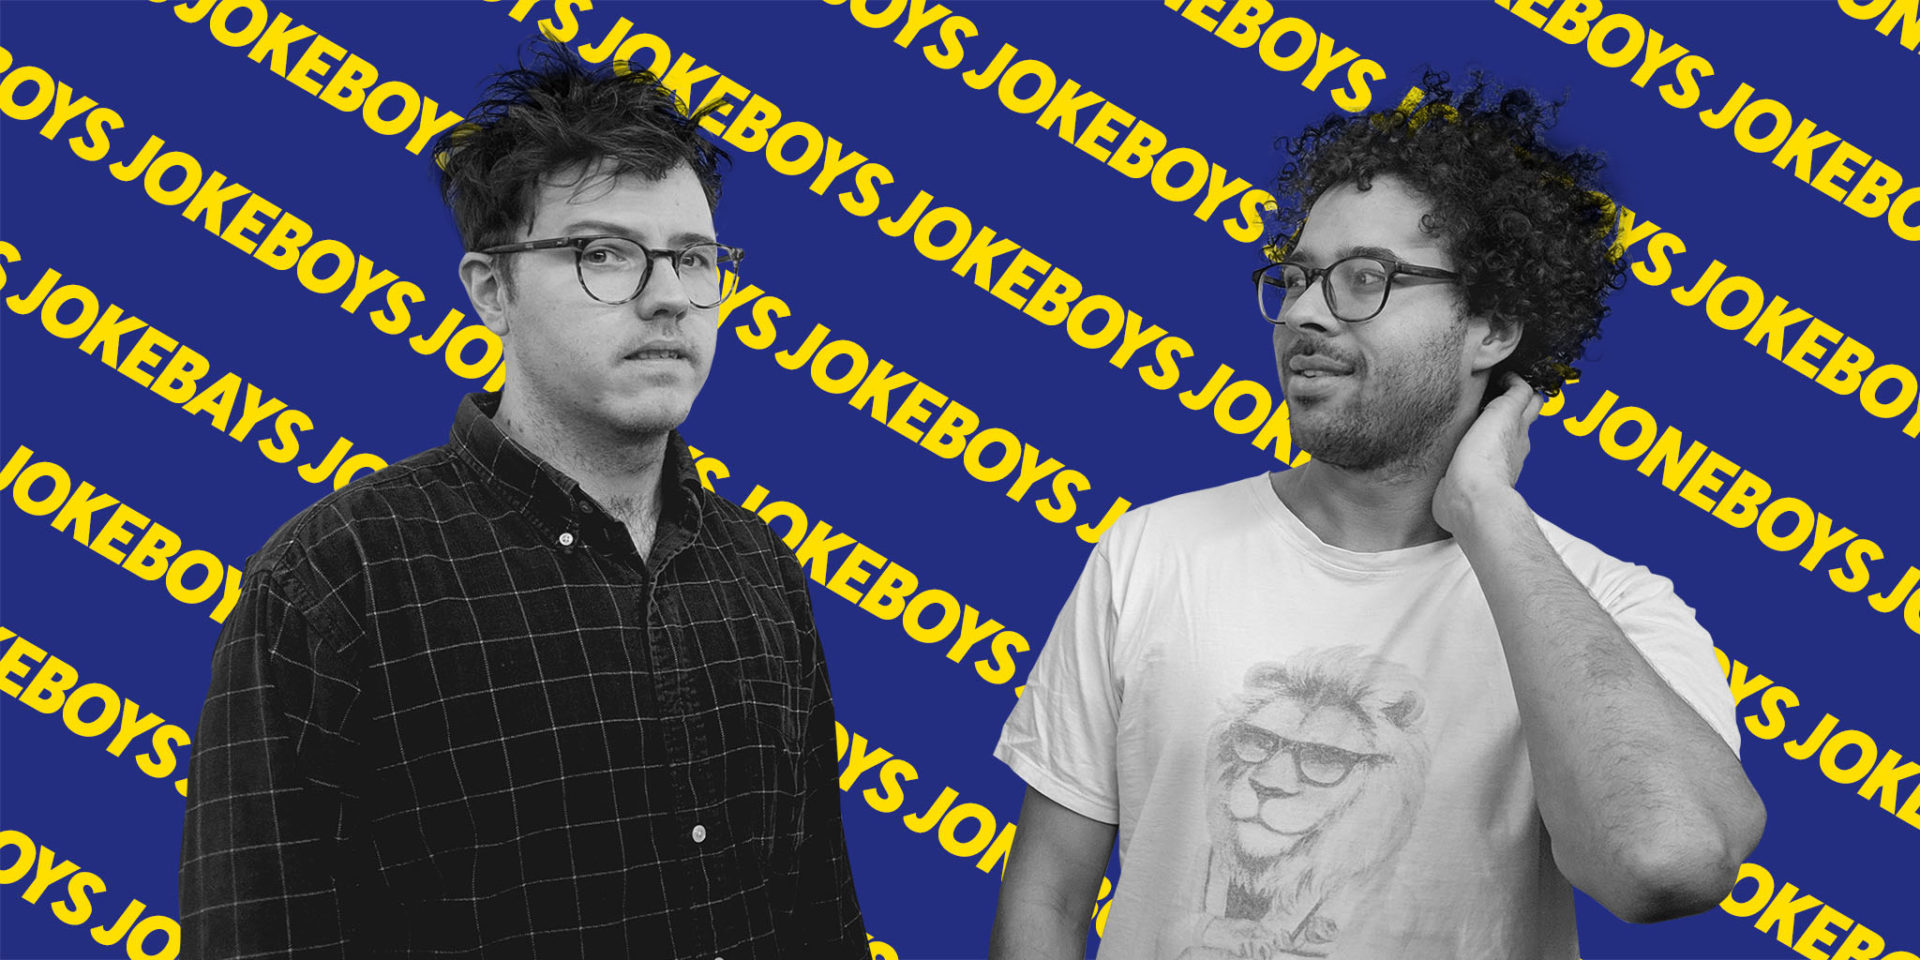 Adam Flood and Blake AJ: 'Joke Boys' Brighton Fringe Festival 2019